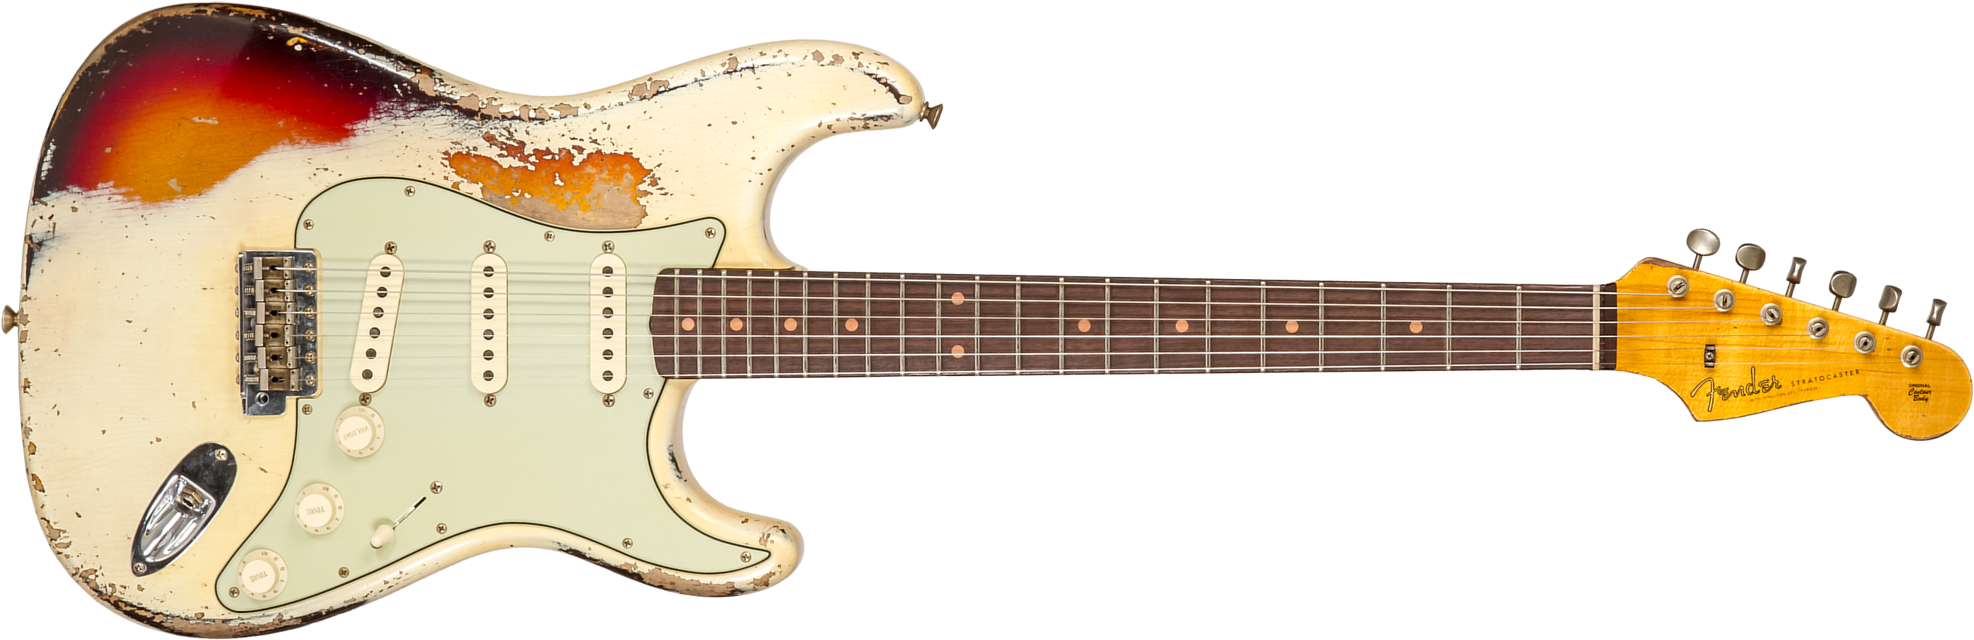 Fender Custom Shop Strat 1959 3s Trem Rw #cz576189 - Super Heavy Relic Vintage White O. 3-color Sunburs - E-Gitarre in Str-Form - Main picture